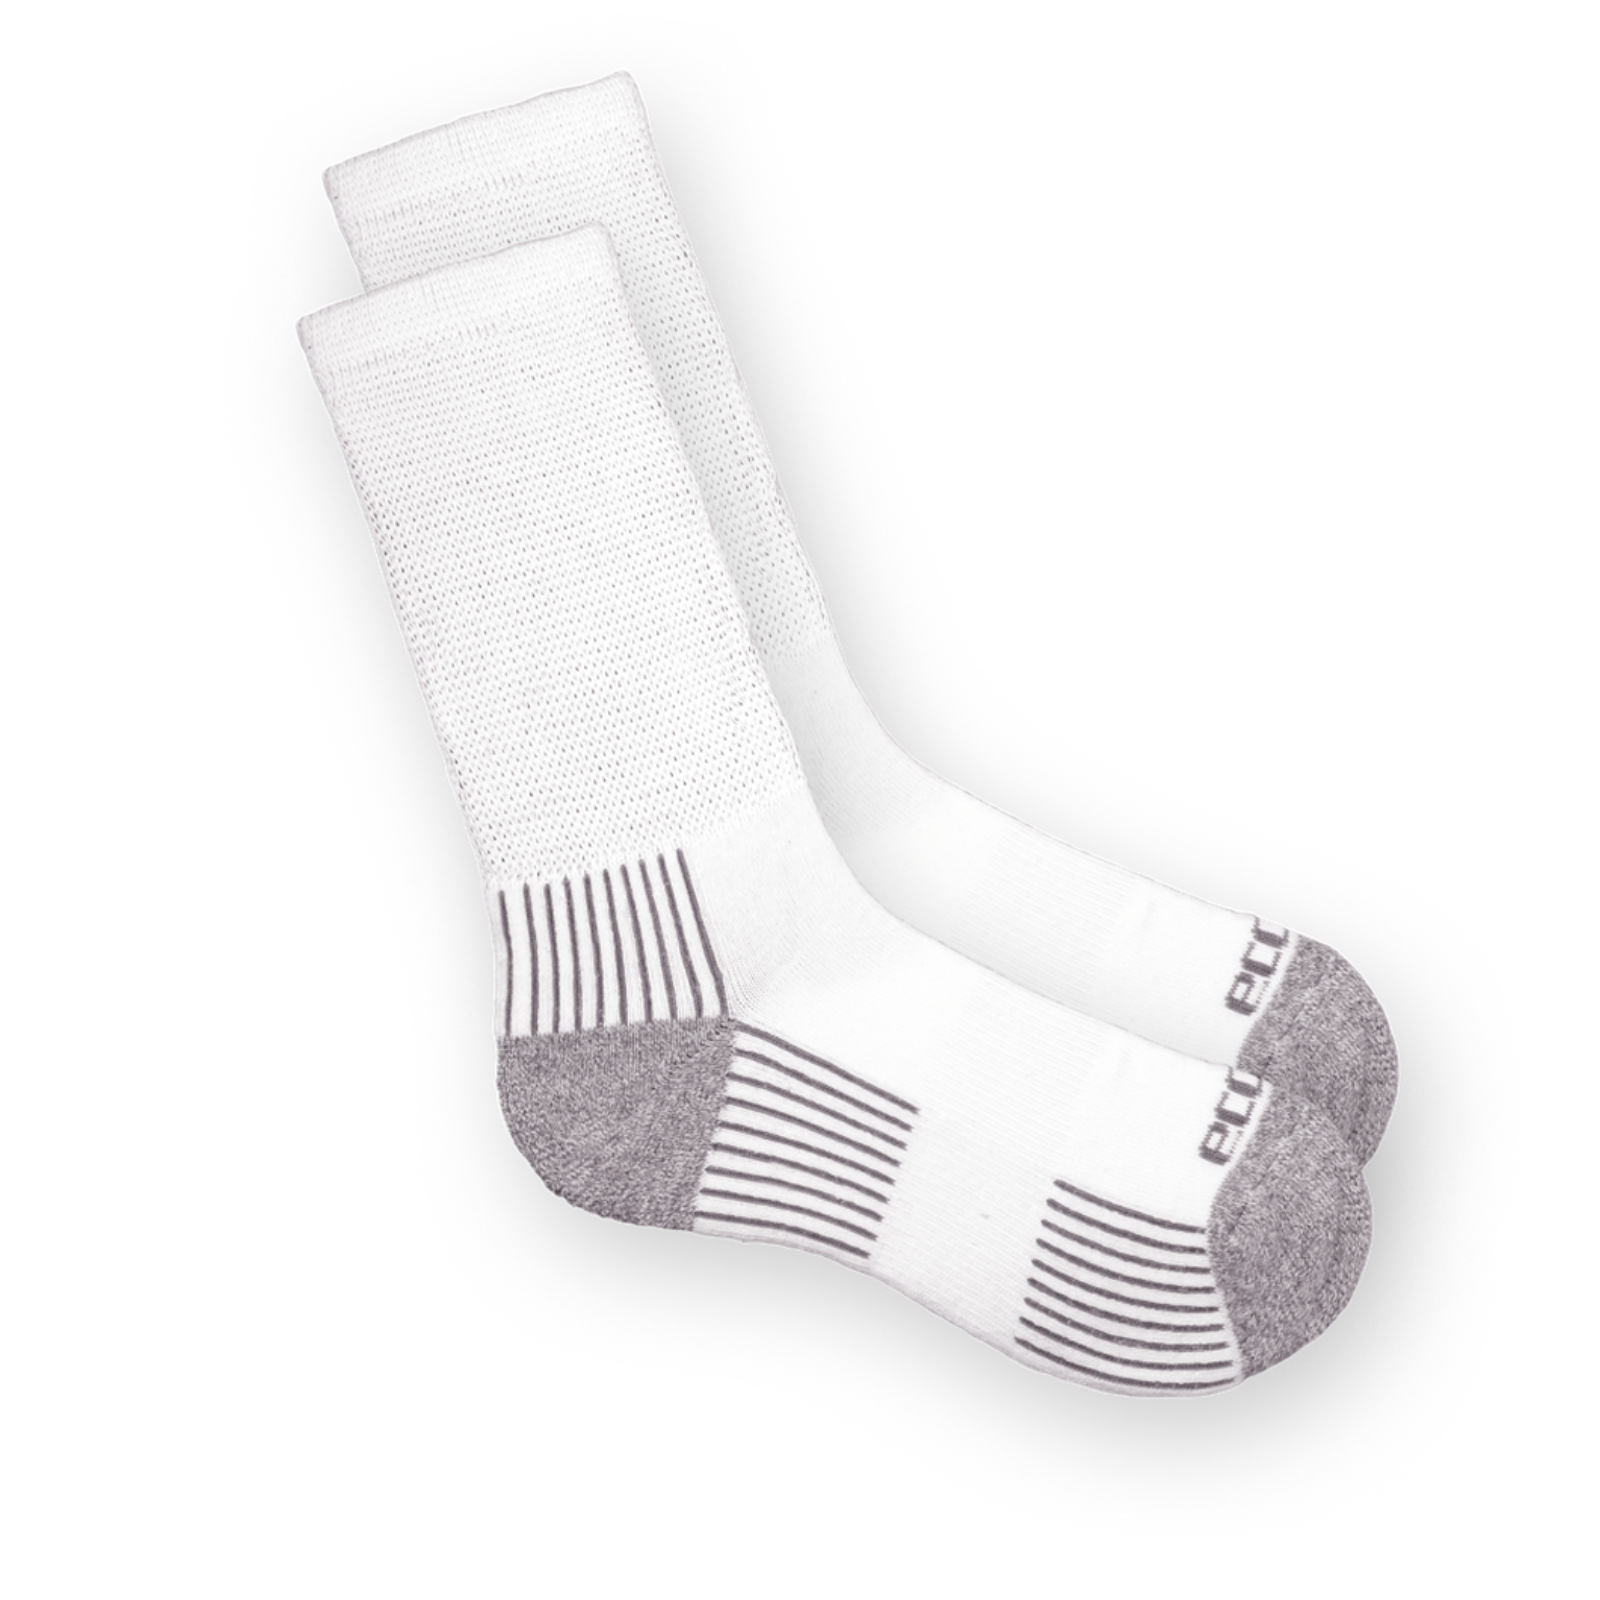 Ecosox Diabetic Non-Binding Bamboo Crew women's and men's socks in white